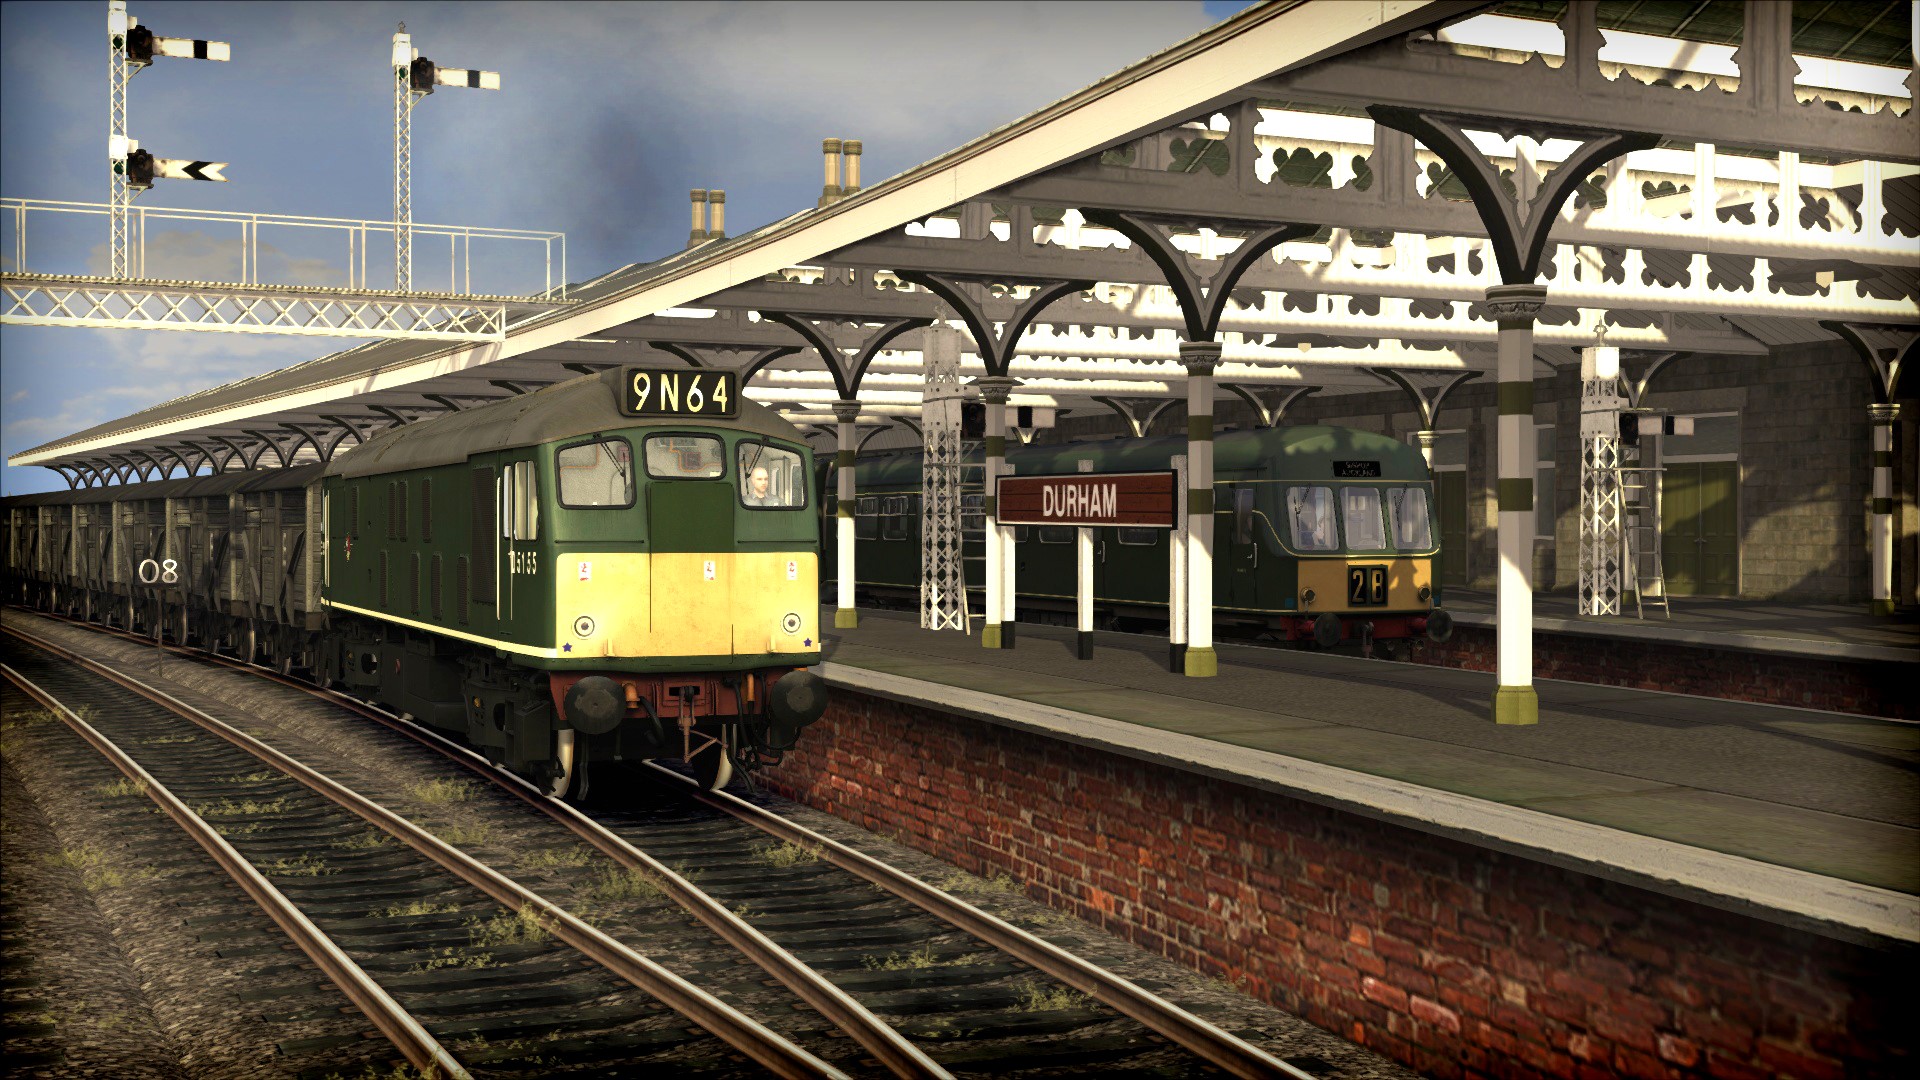 Train Simulator Weardale Teesdale Network Steam -- RU